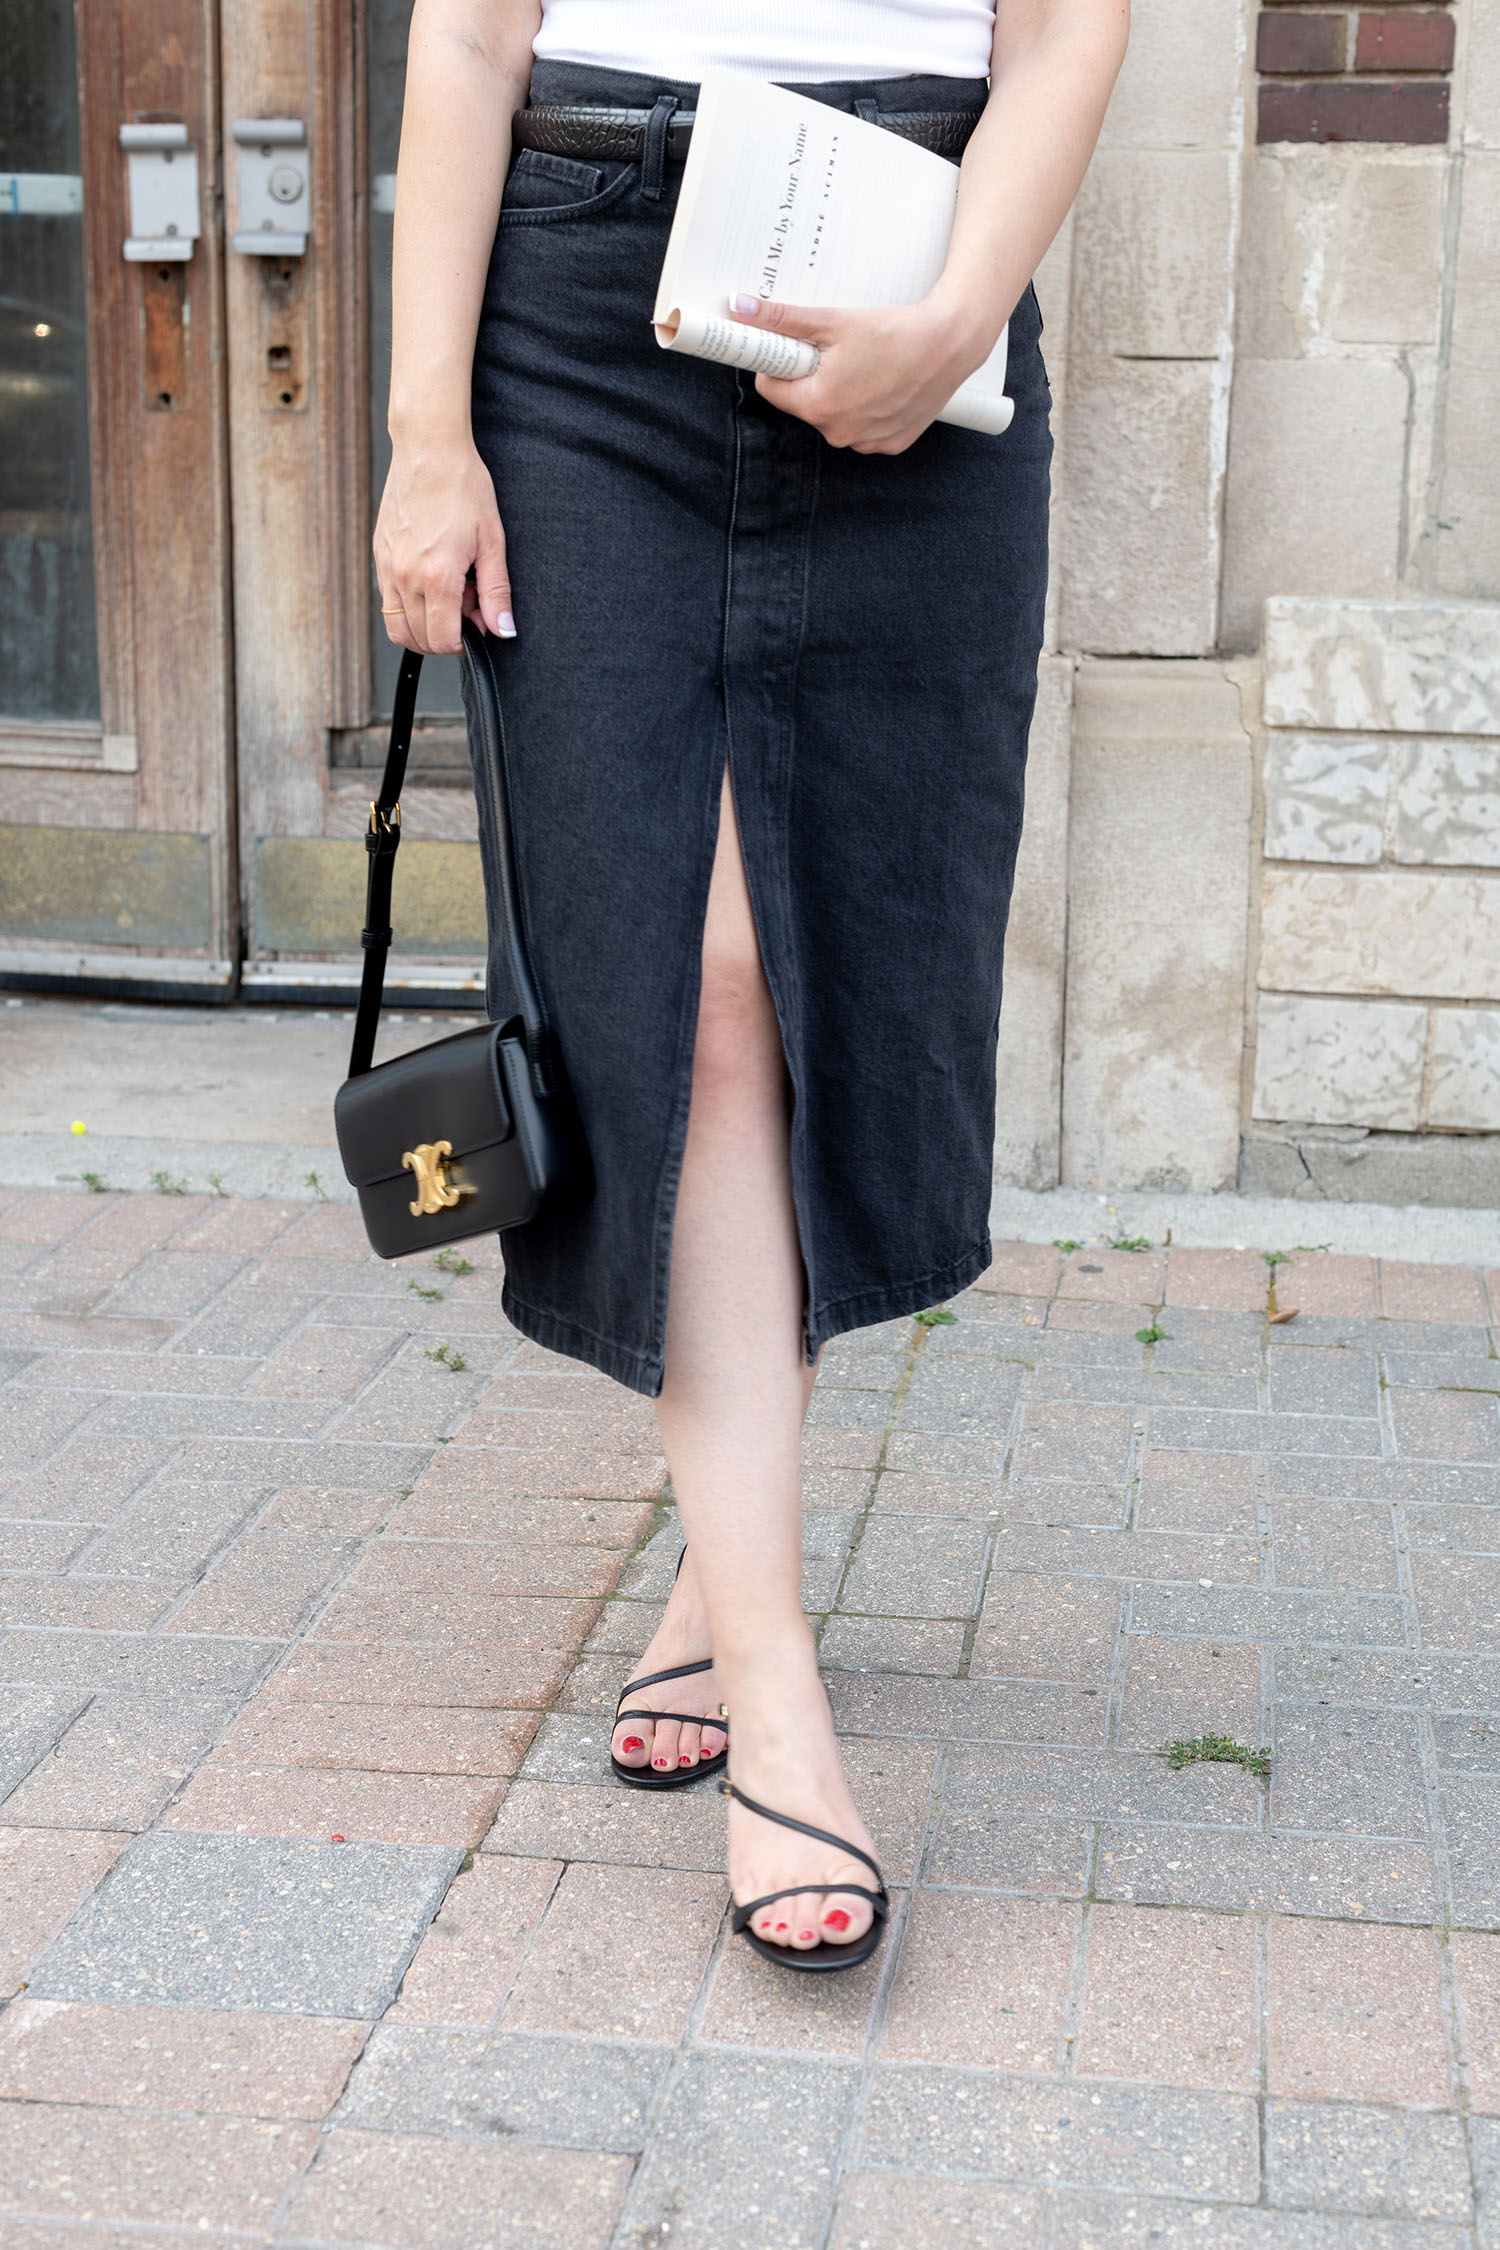 Coco & Voltaire - Celine Triomphe handbag, Zara sandals, Mango denim skirt